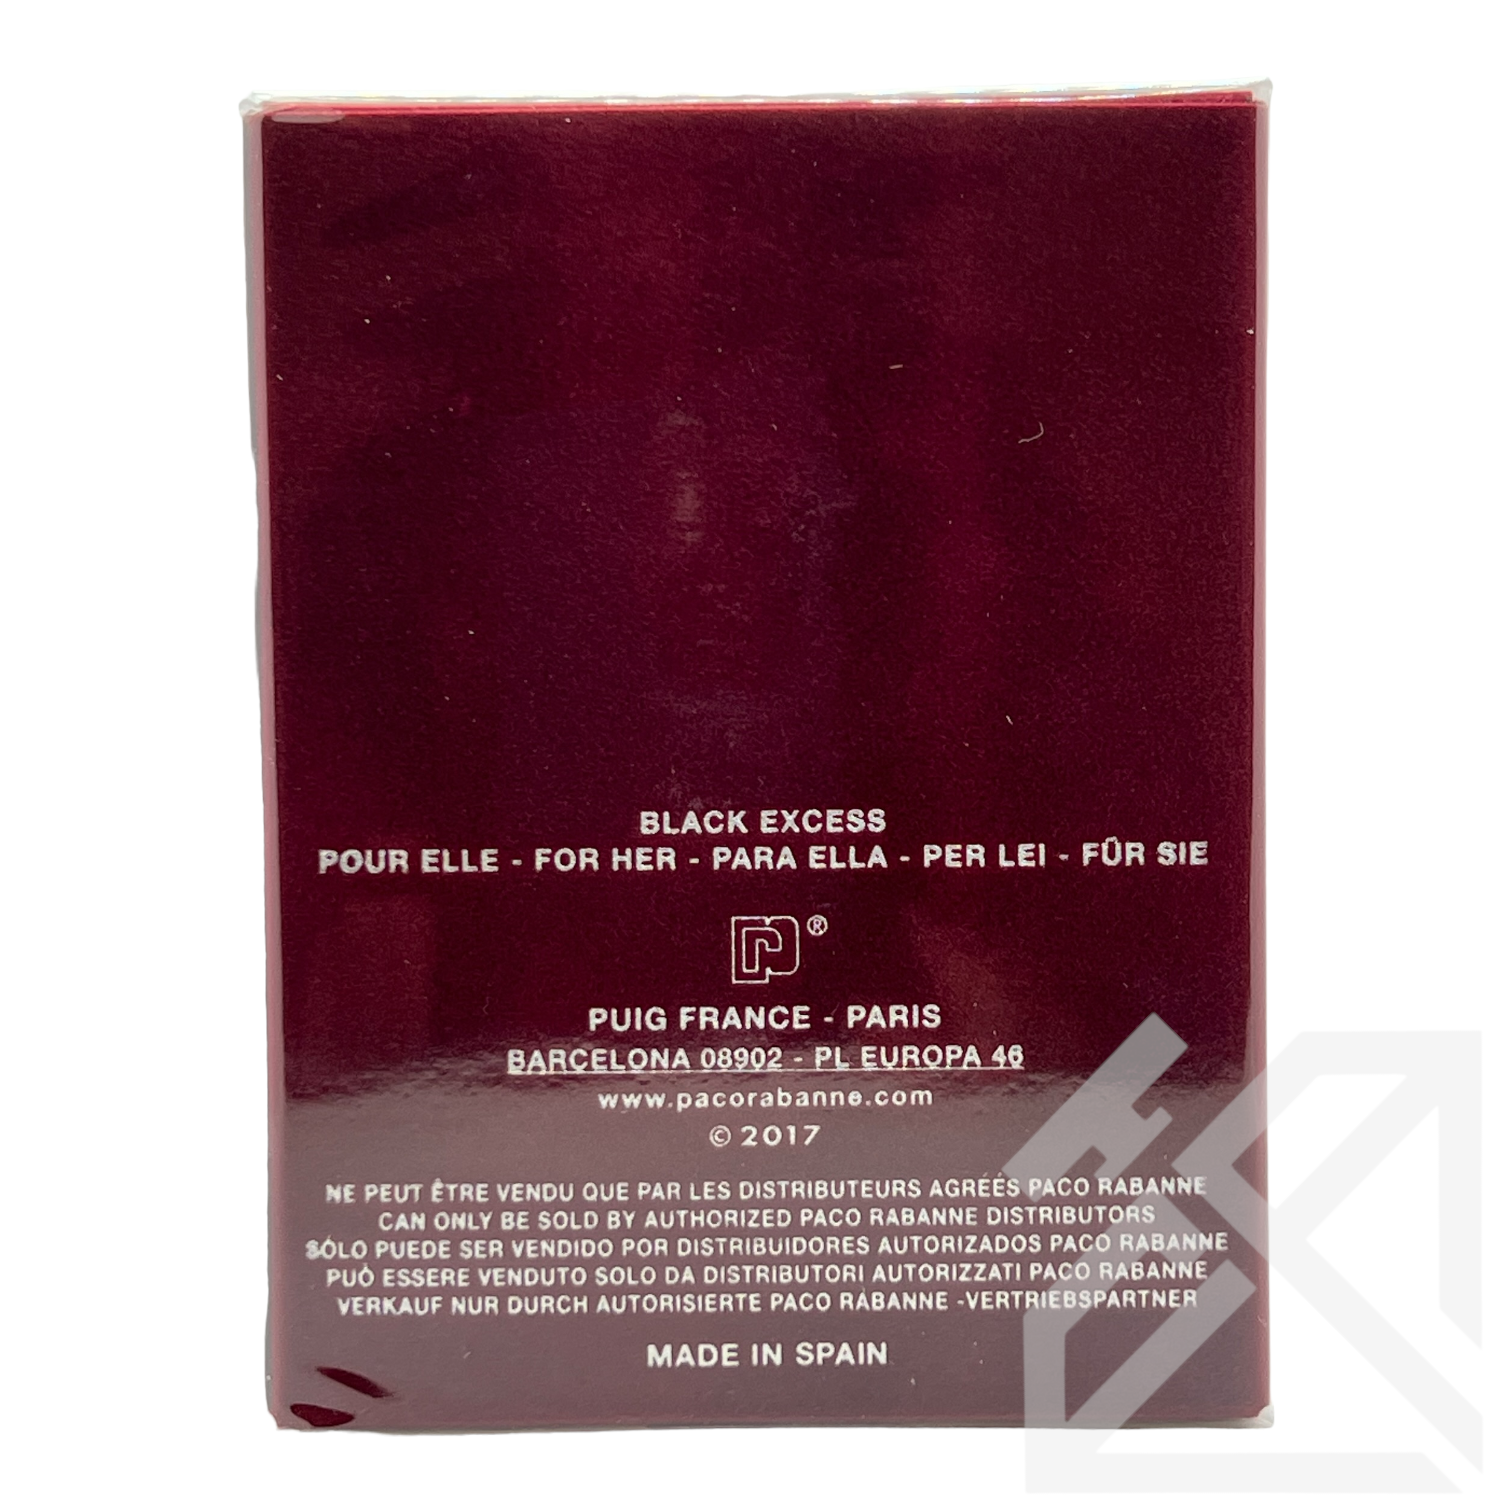 Paco Rabanne Black 30ml spray Eau Addict Parfum de XS – Fragrance